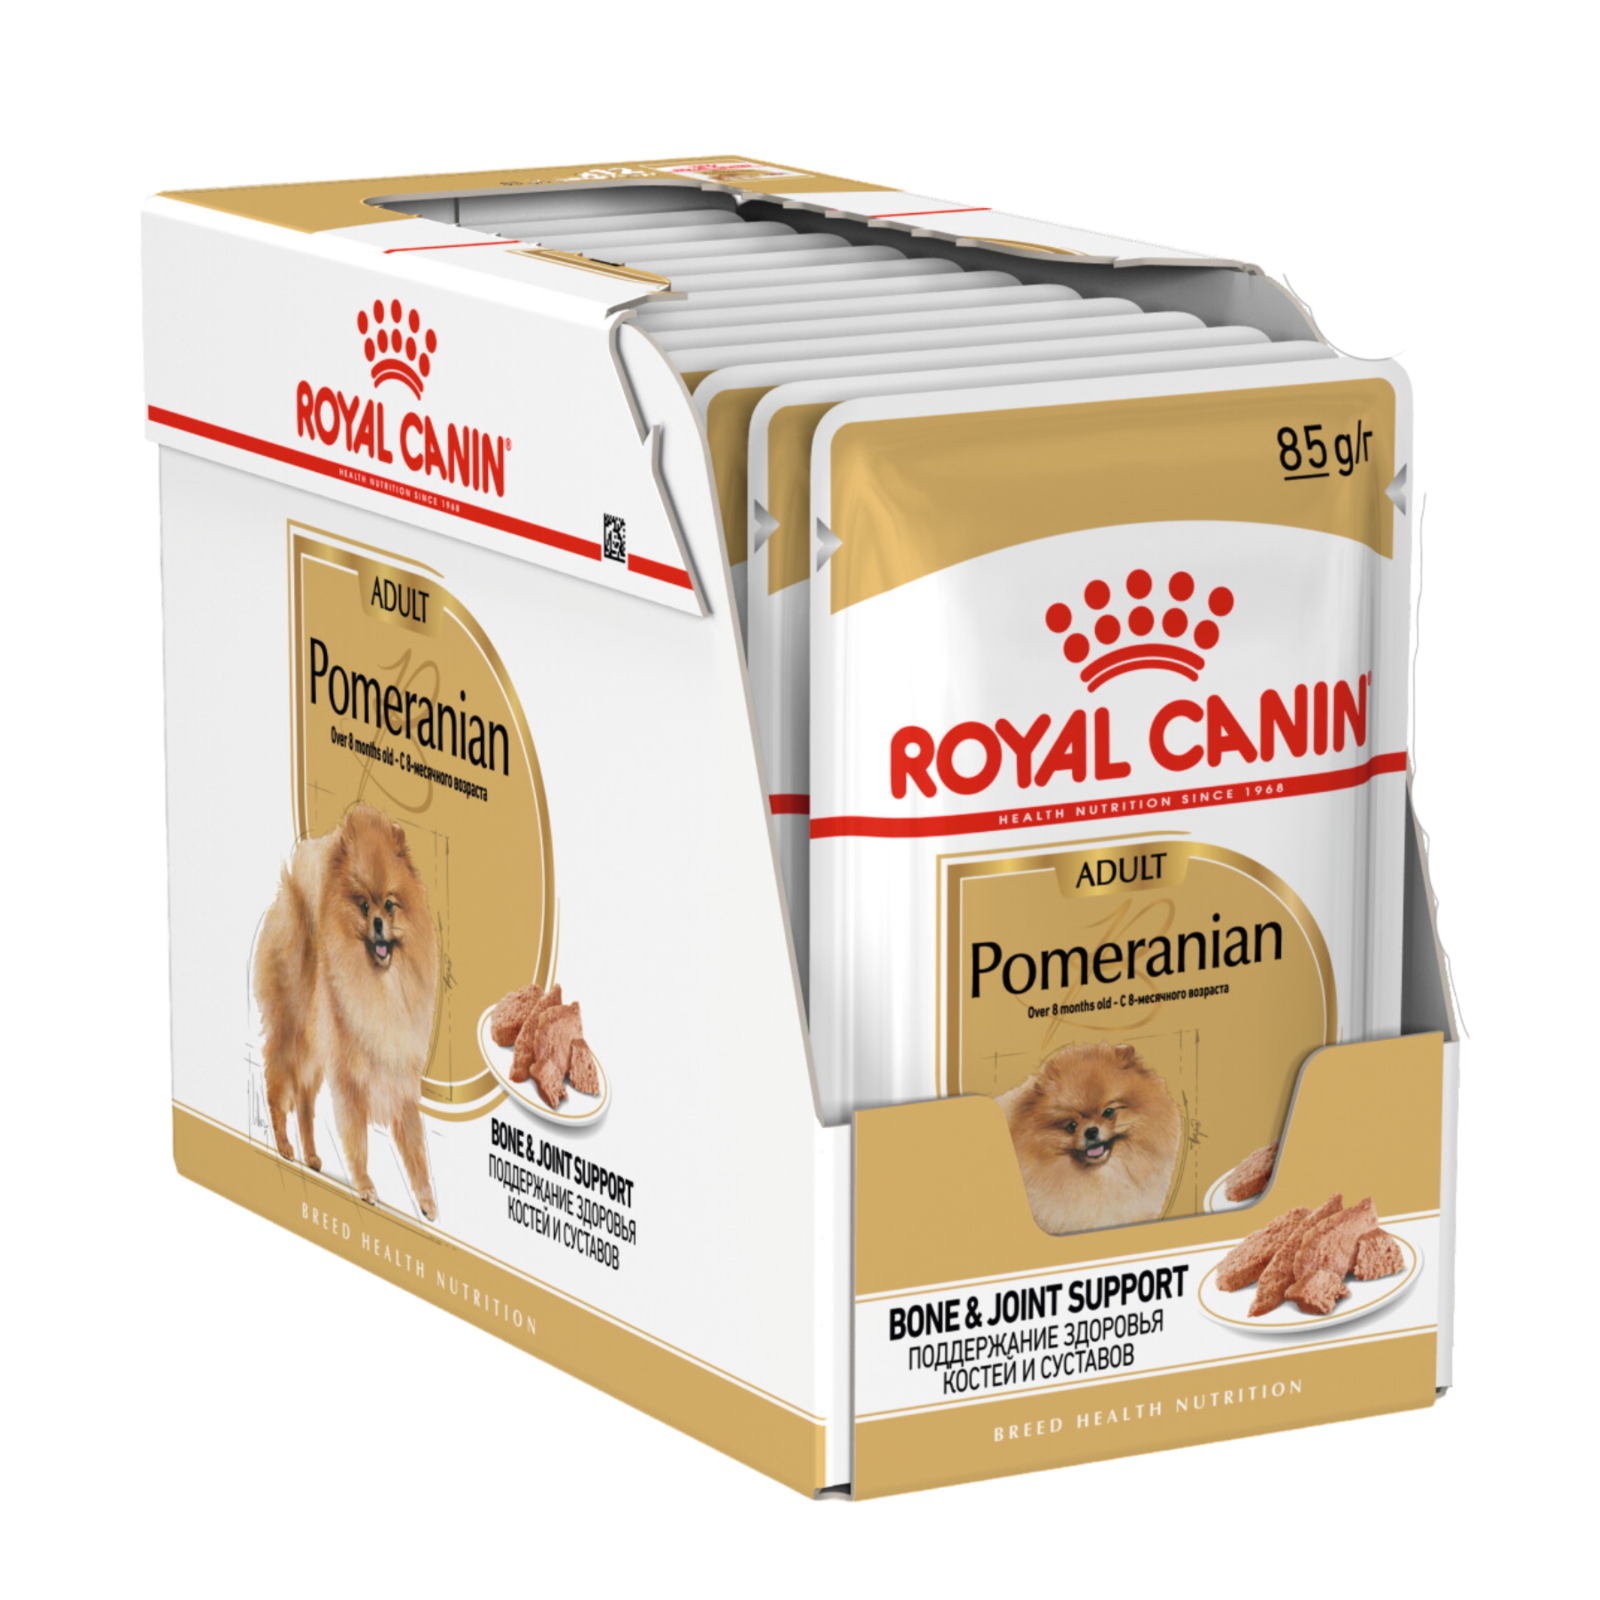 Royal Canin Dog Food Pouch Adult Pomeranian